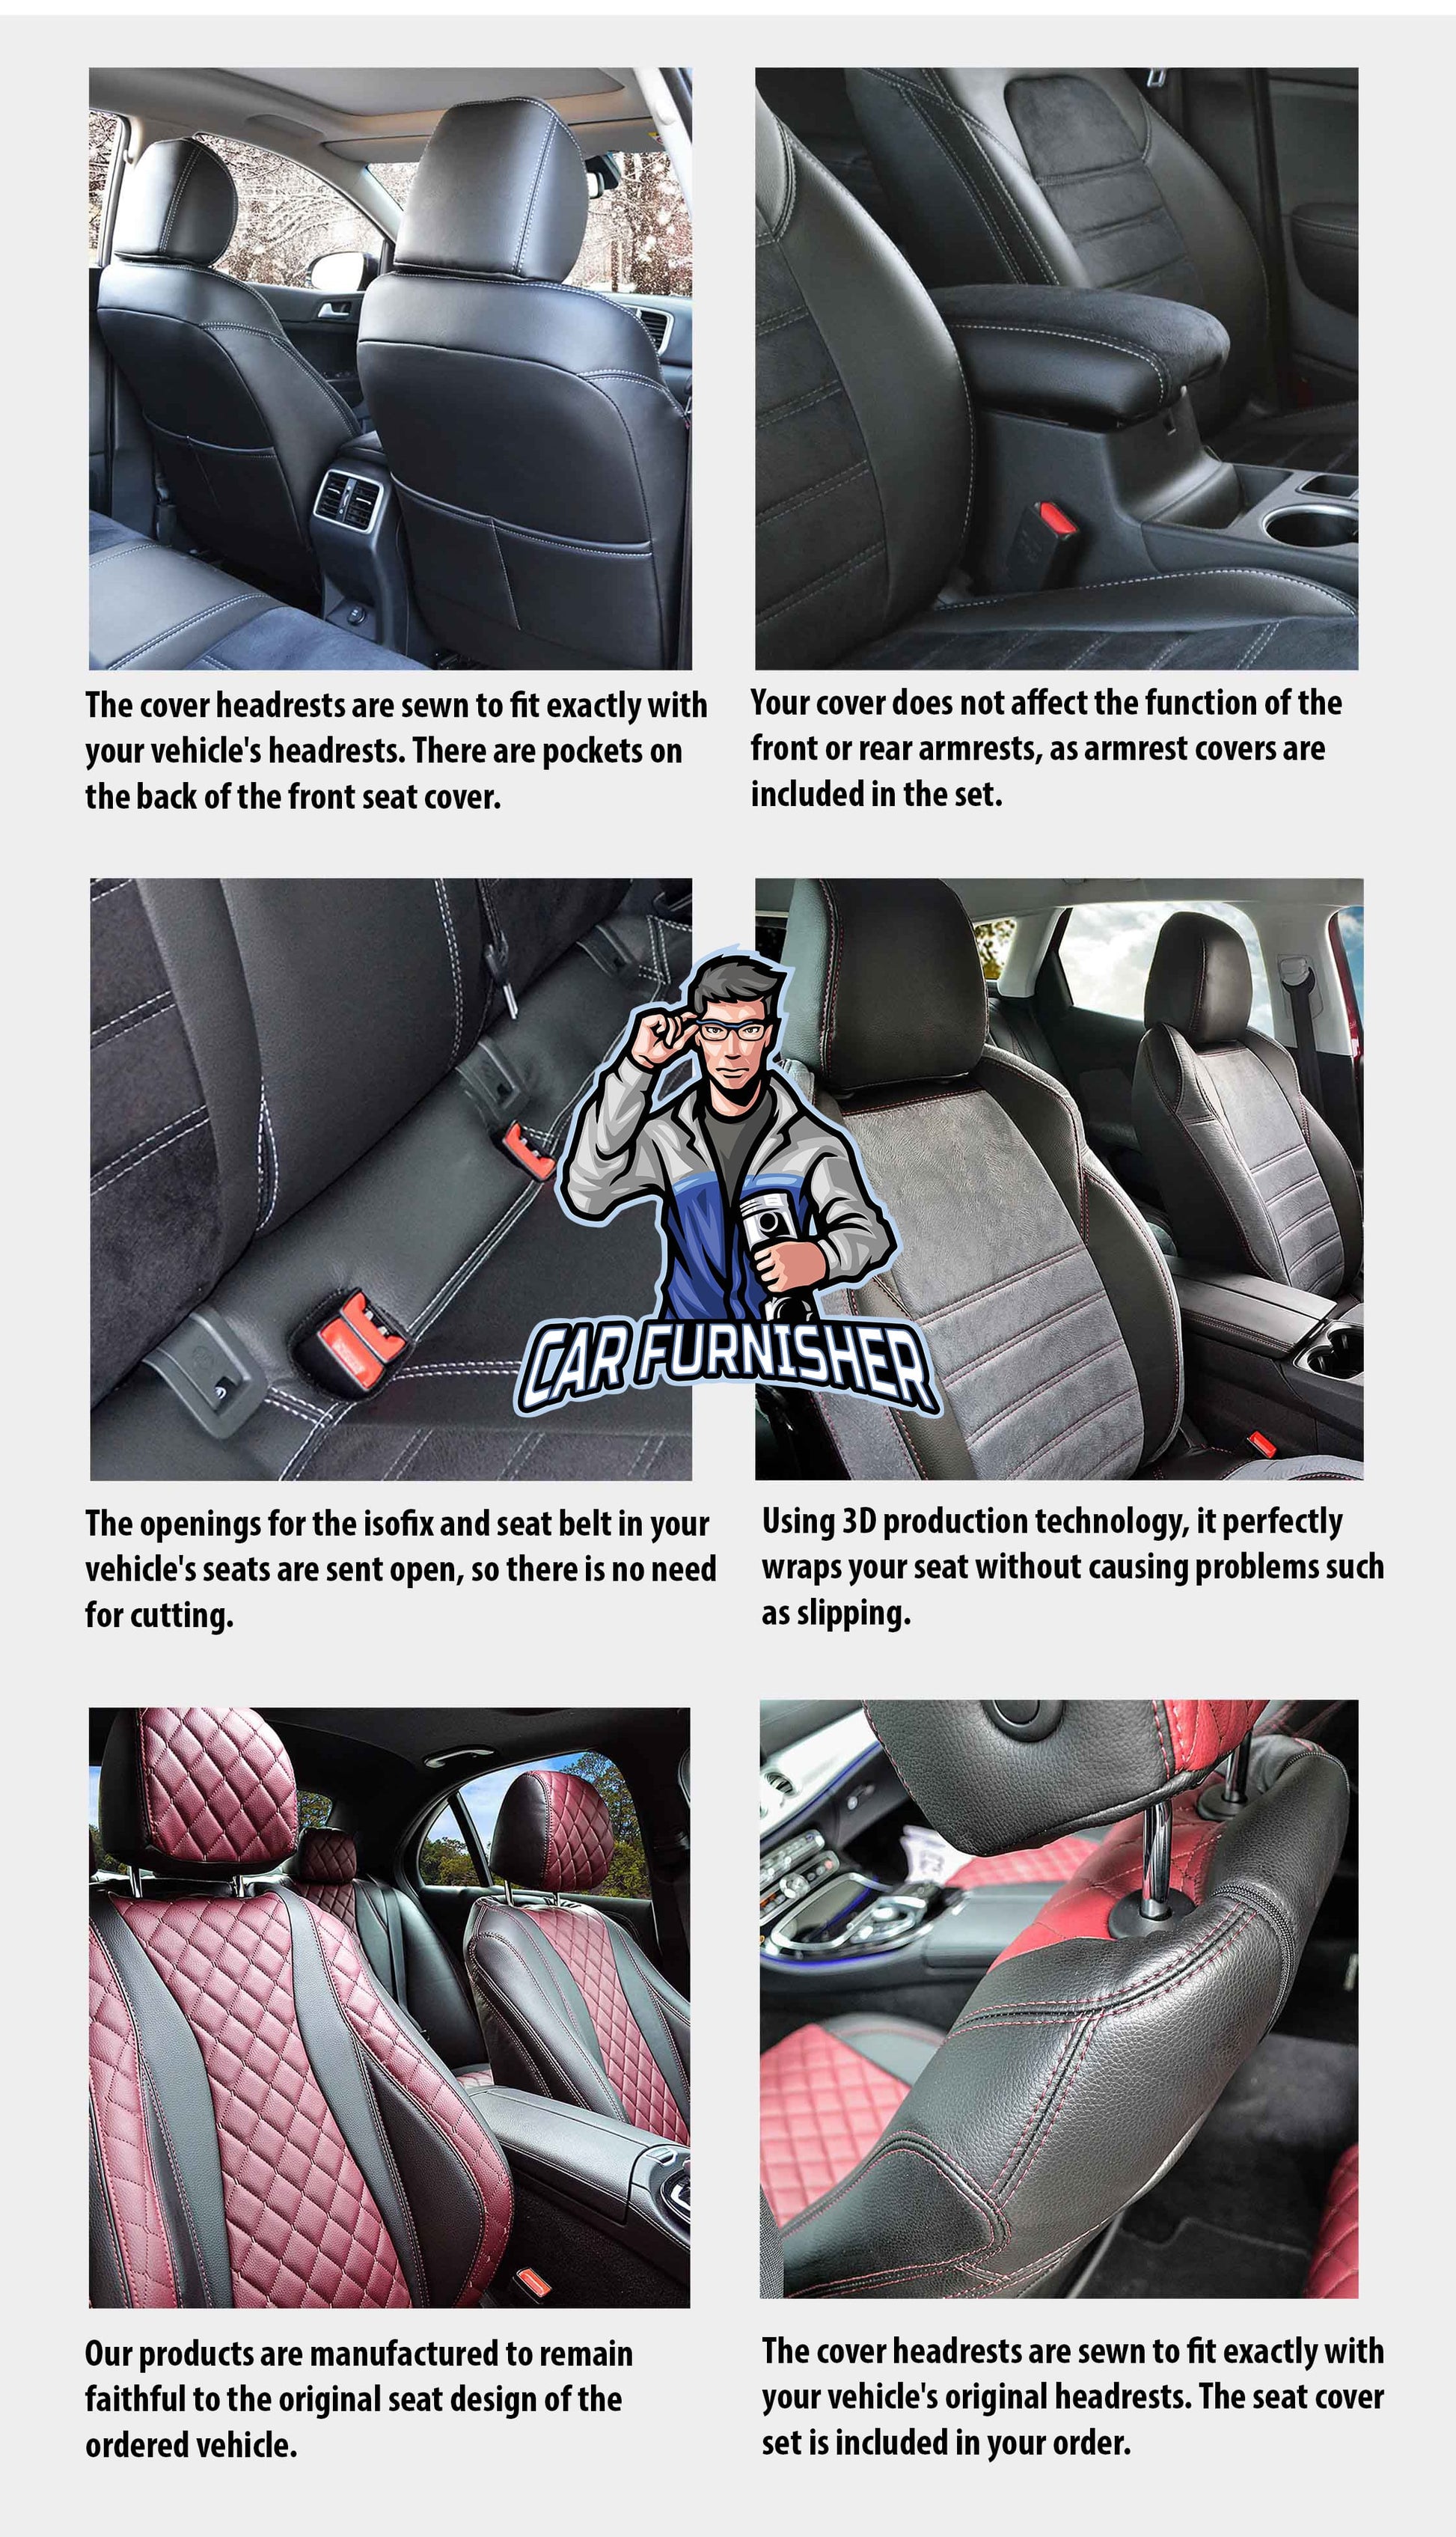 Nissan Pulsar Seat Covers Camouflage Waterproof Design Everest Camo Waterproof Fabric